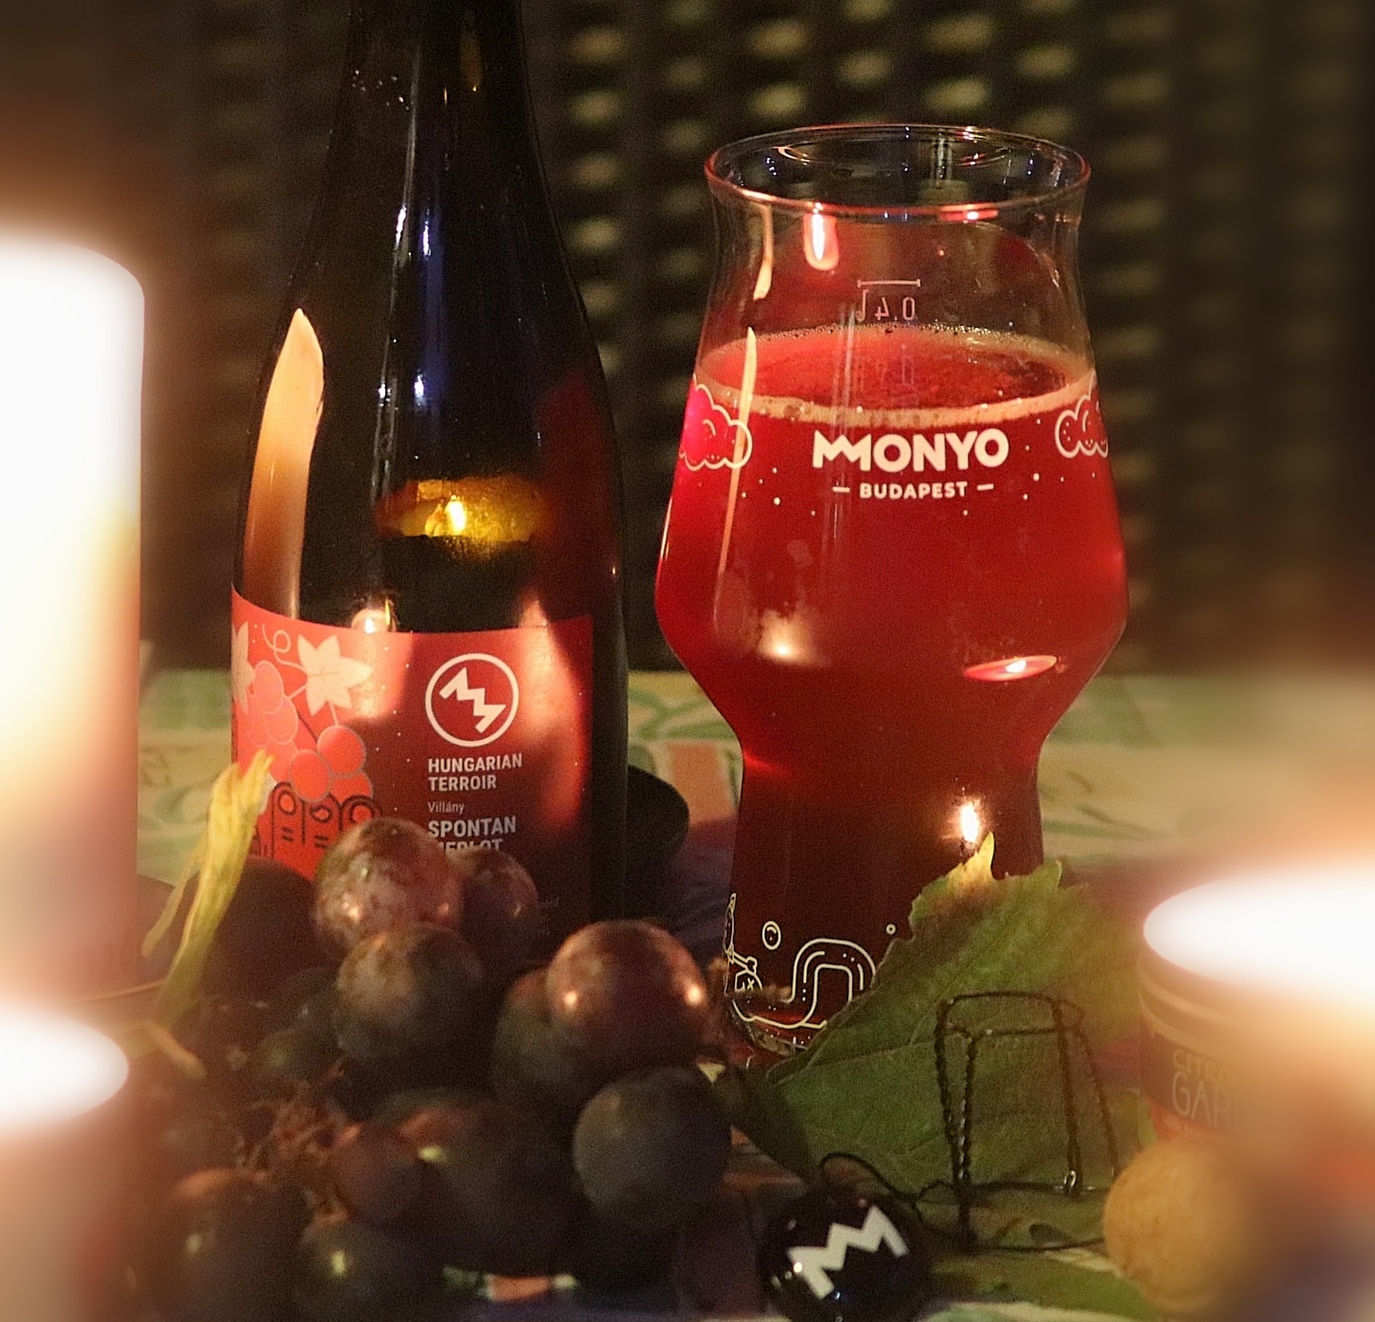 Monyo Hungarian Terroir - Spontan Merlot 2018